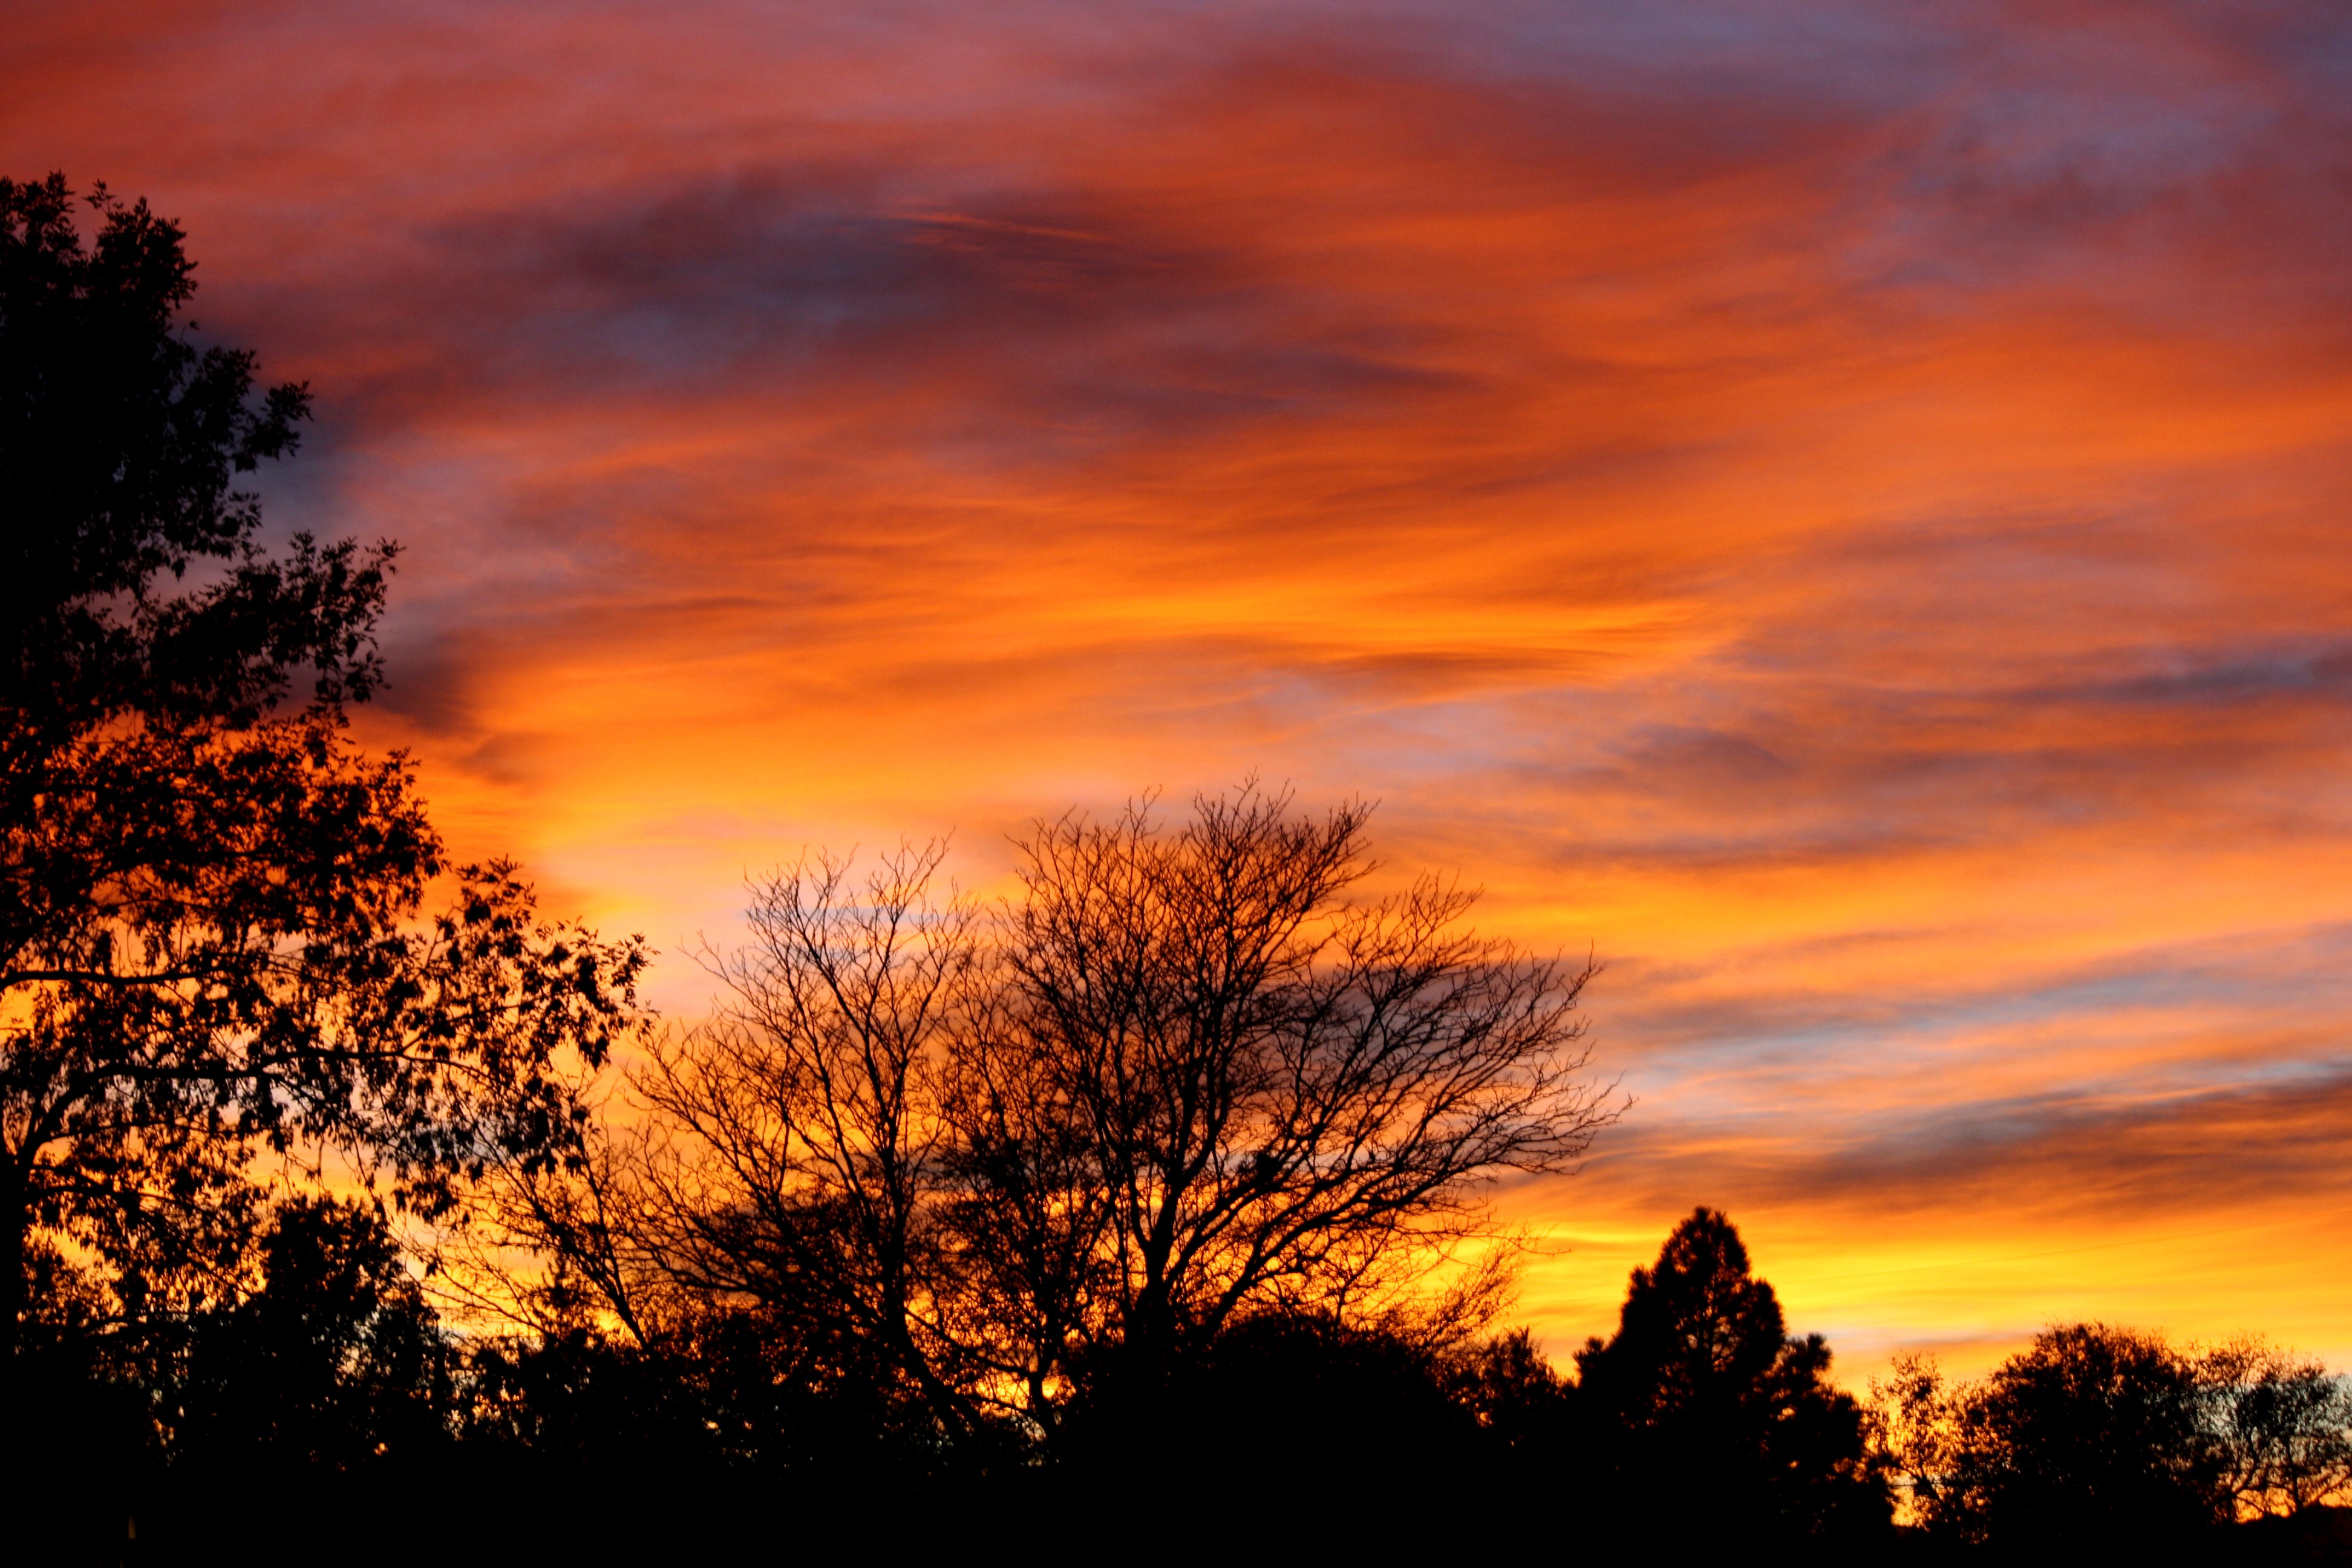 https://www.photos-public-domain.com/wp-content/uploads/2012/10/orange-sunset-with-trees.jpg